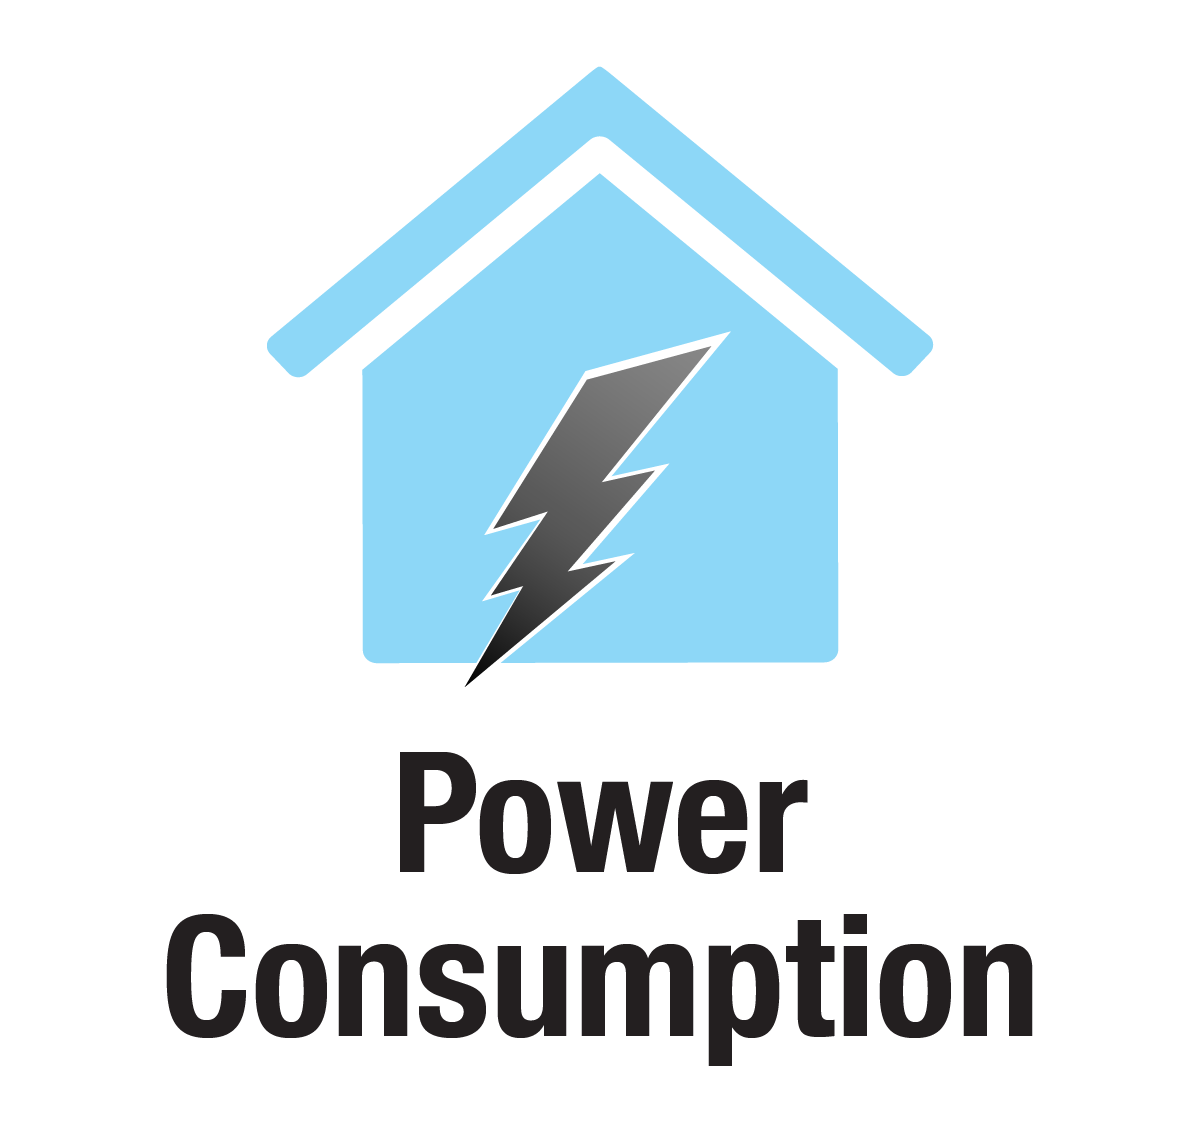 Low Energy Consumption